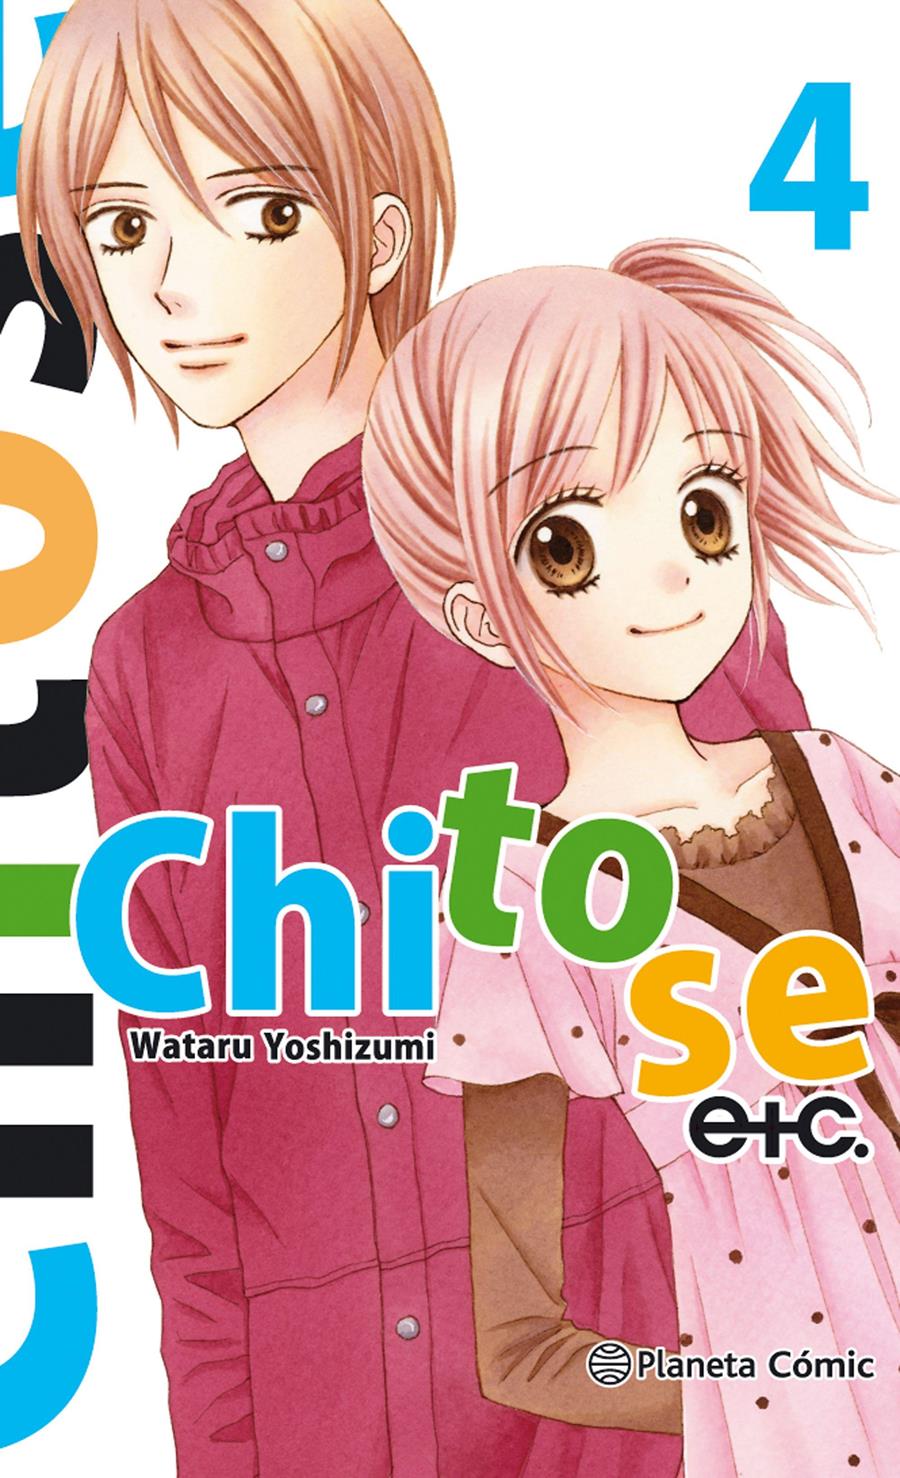 Chitose Etc nº 04/07 | N1117-PLA04 | Wataru Yoshizumi | Terra de Còmic - Tu tienda de cómics online especializada en cómics, manga y merchandising